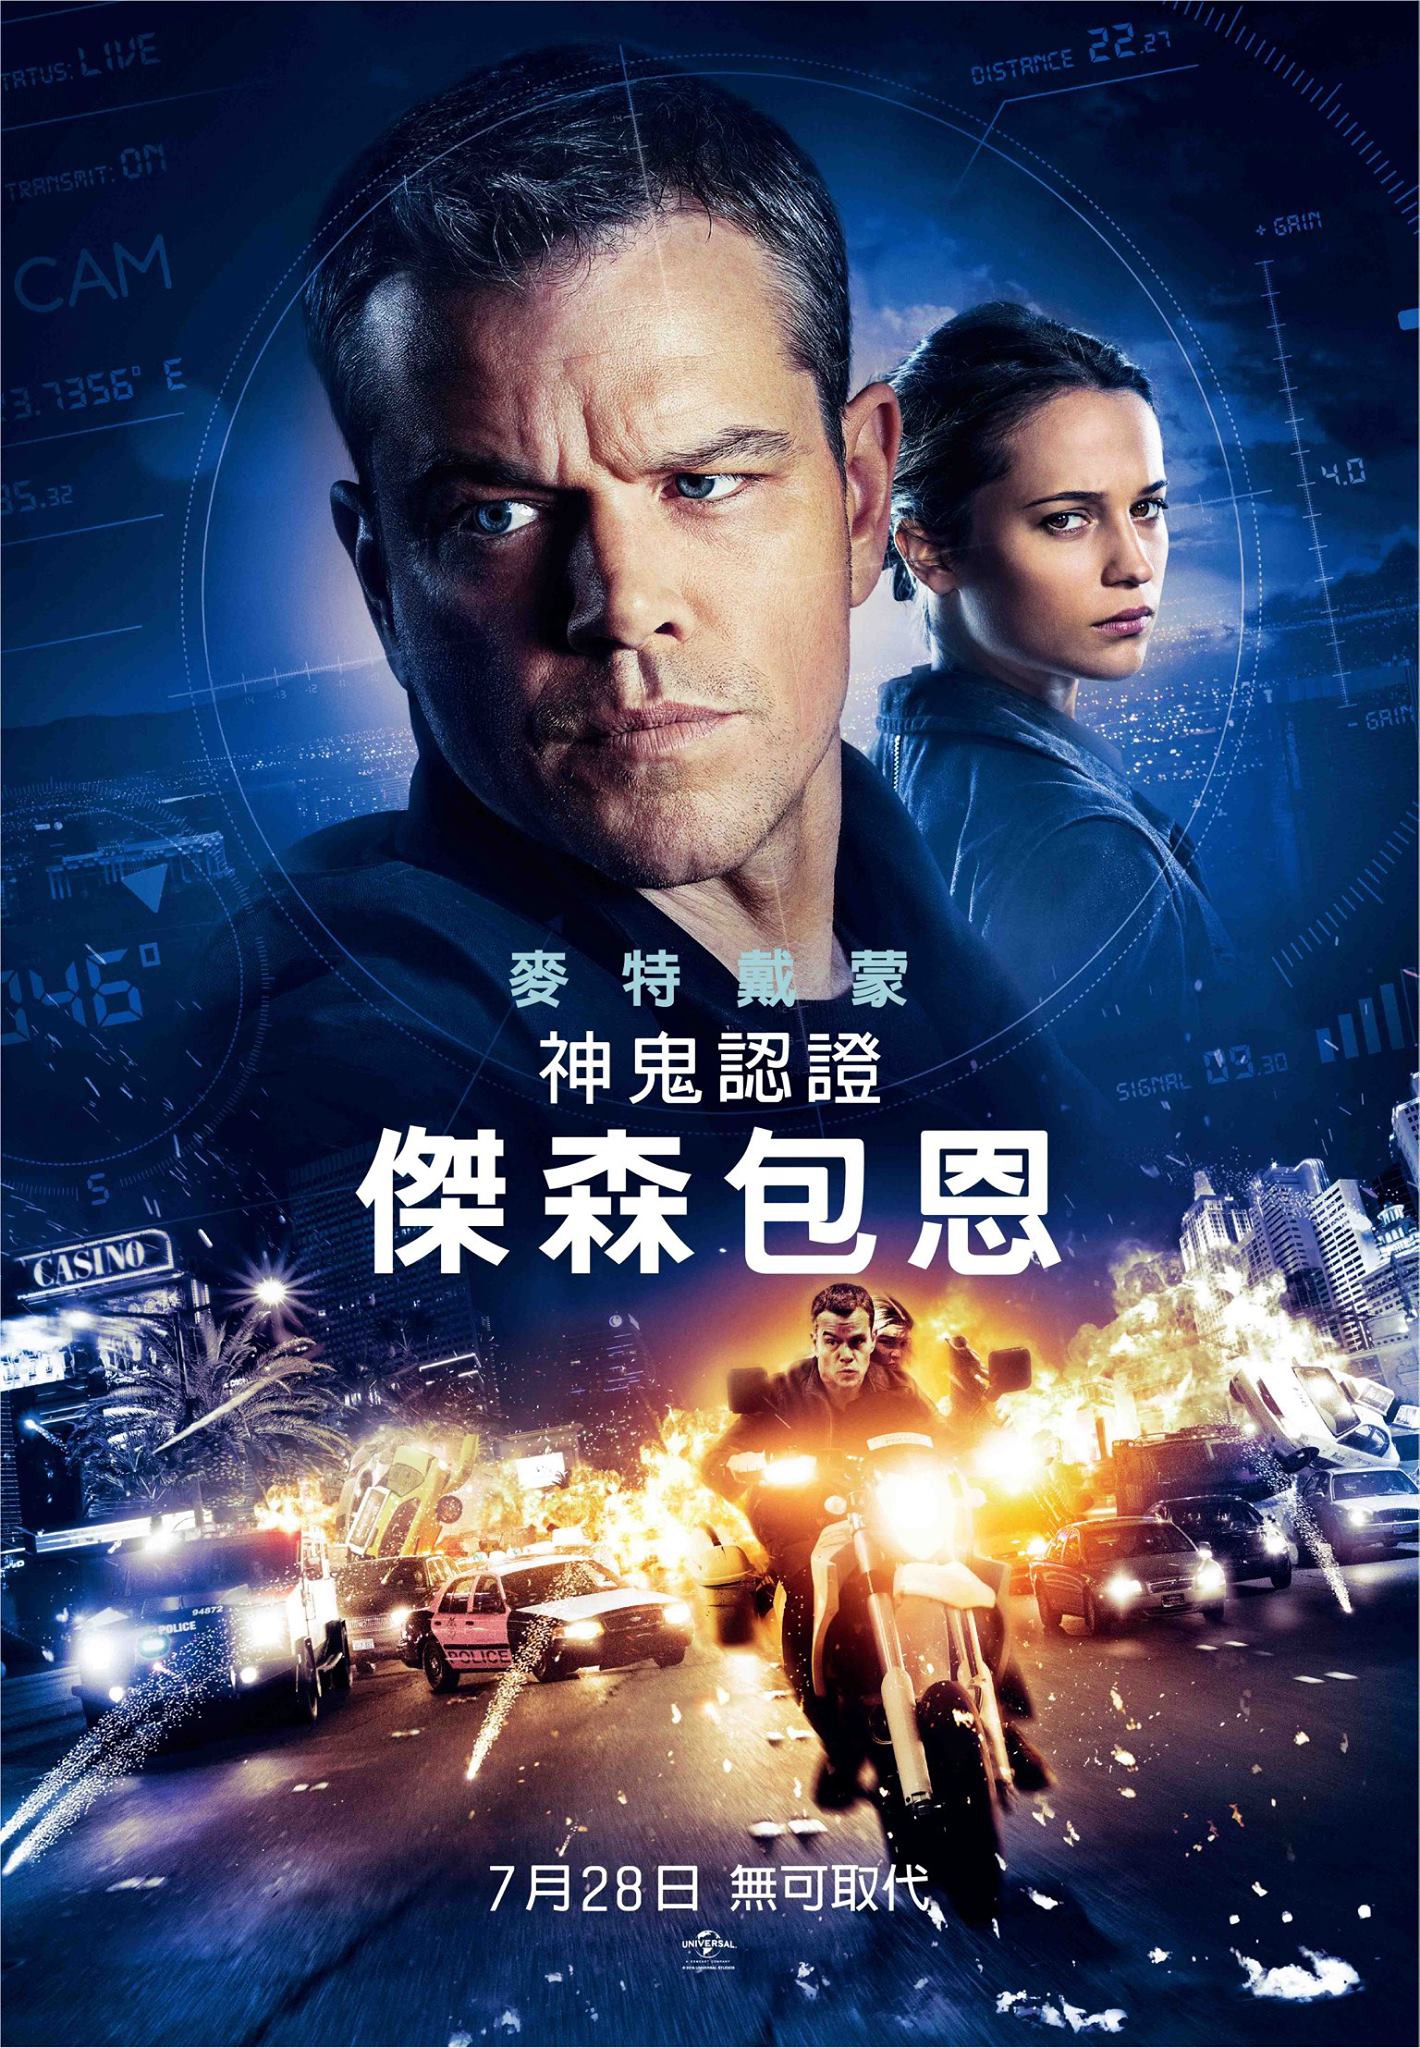 Mega Sized Movie Poster Image for Jason Bourne (#4 of 6)